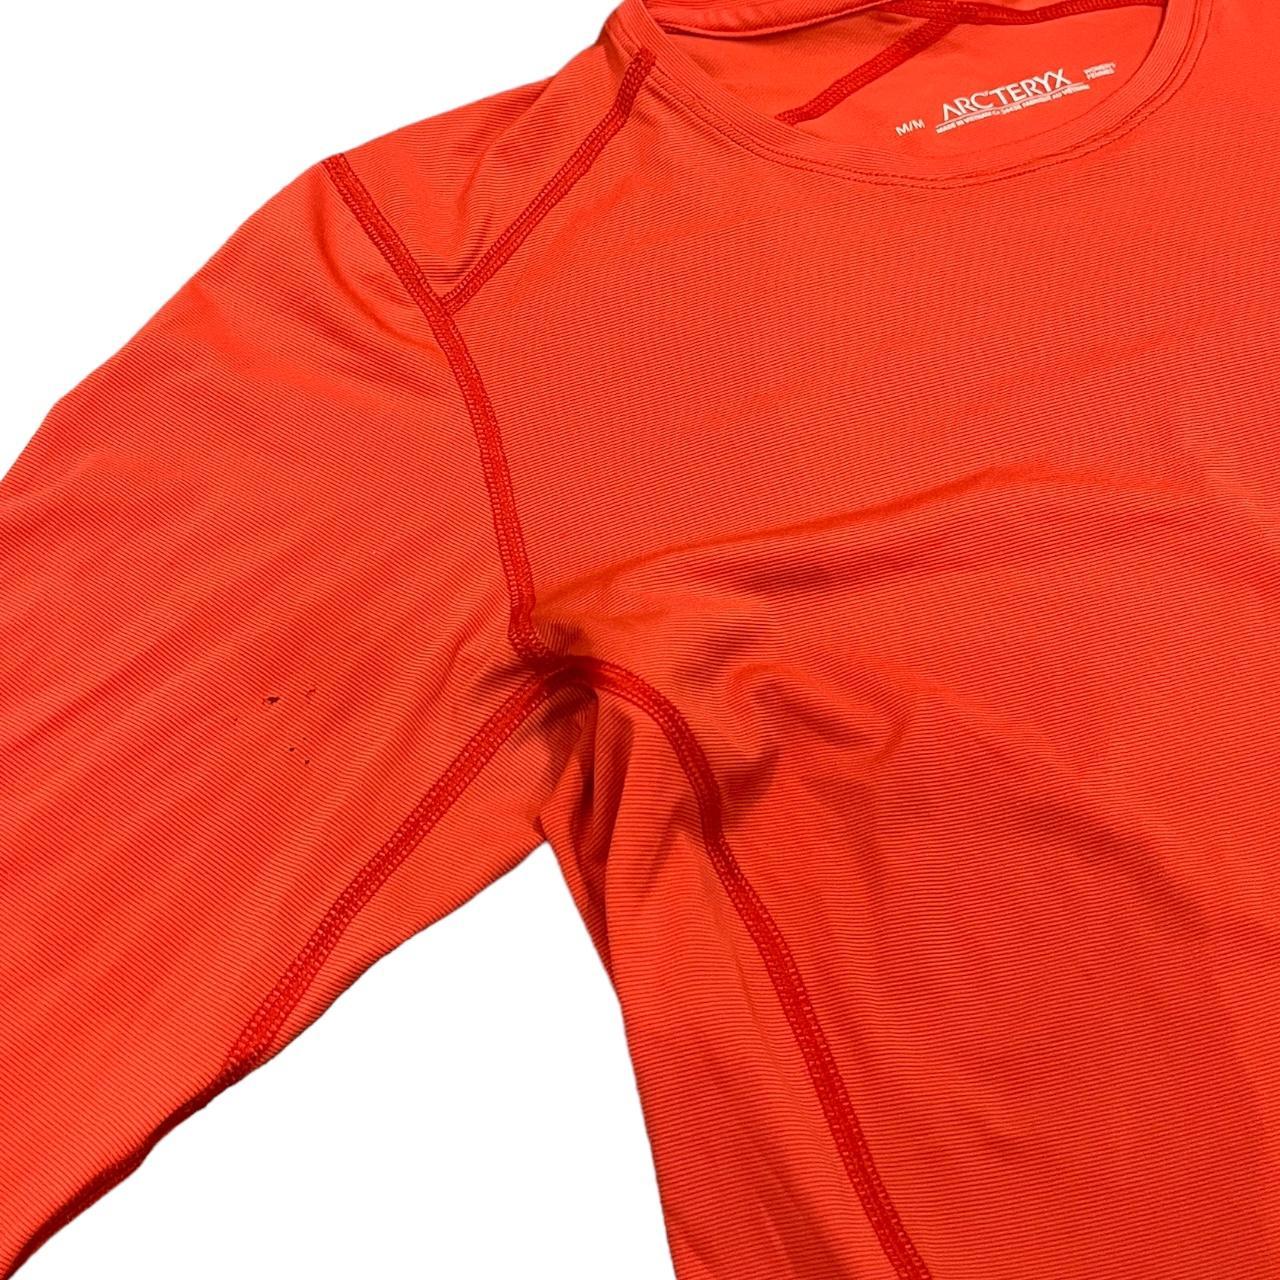 Arc'teryx Women’s Medium Orange Long Sleeve T-Shirt Activewear Top